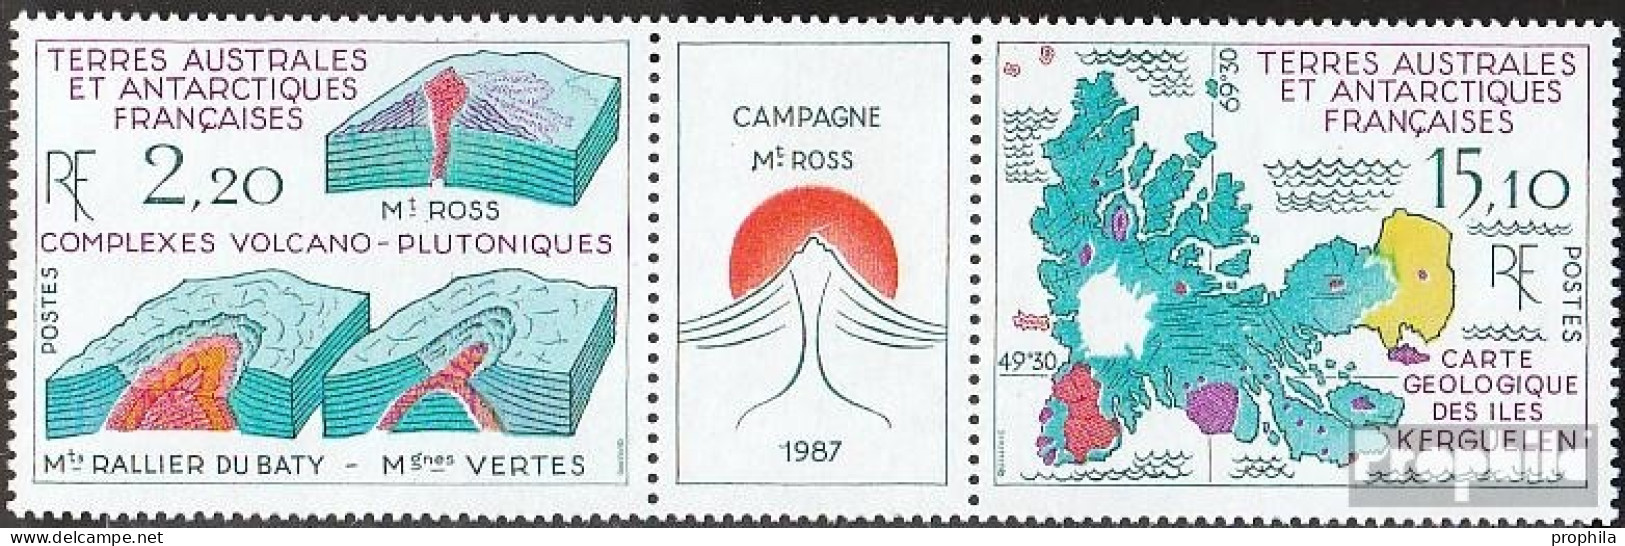 Französ. Gebiete Antarktis 242-243 Dreierstreifen (kompl.Ausg.) Postfrisch 1988 Mt.-Ross-Kampagne - Neufs